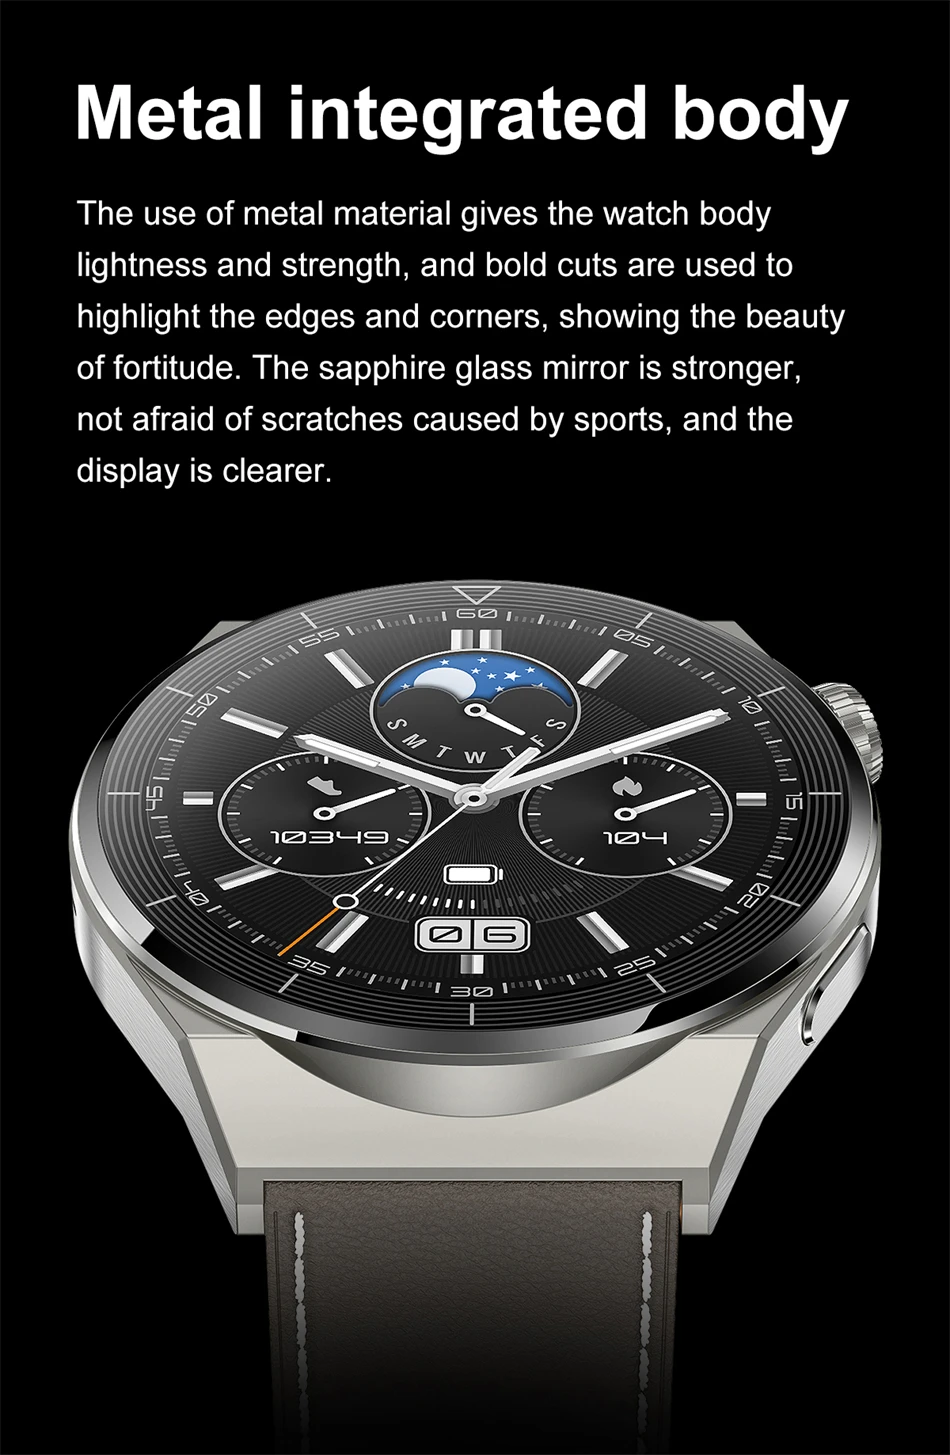 Sdc29424124a643c89a4d57c54306d86b5 Unleash Your Potential with GT3 Pro Smart Watch